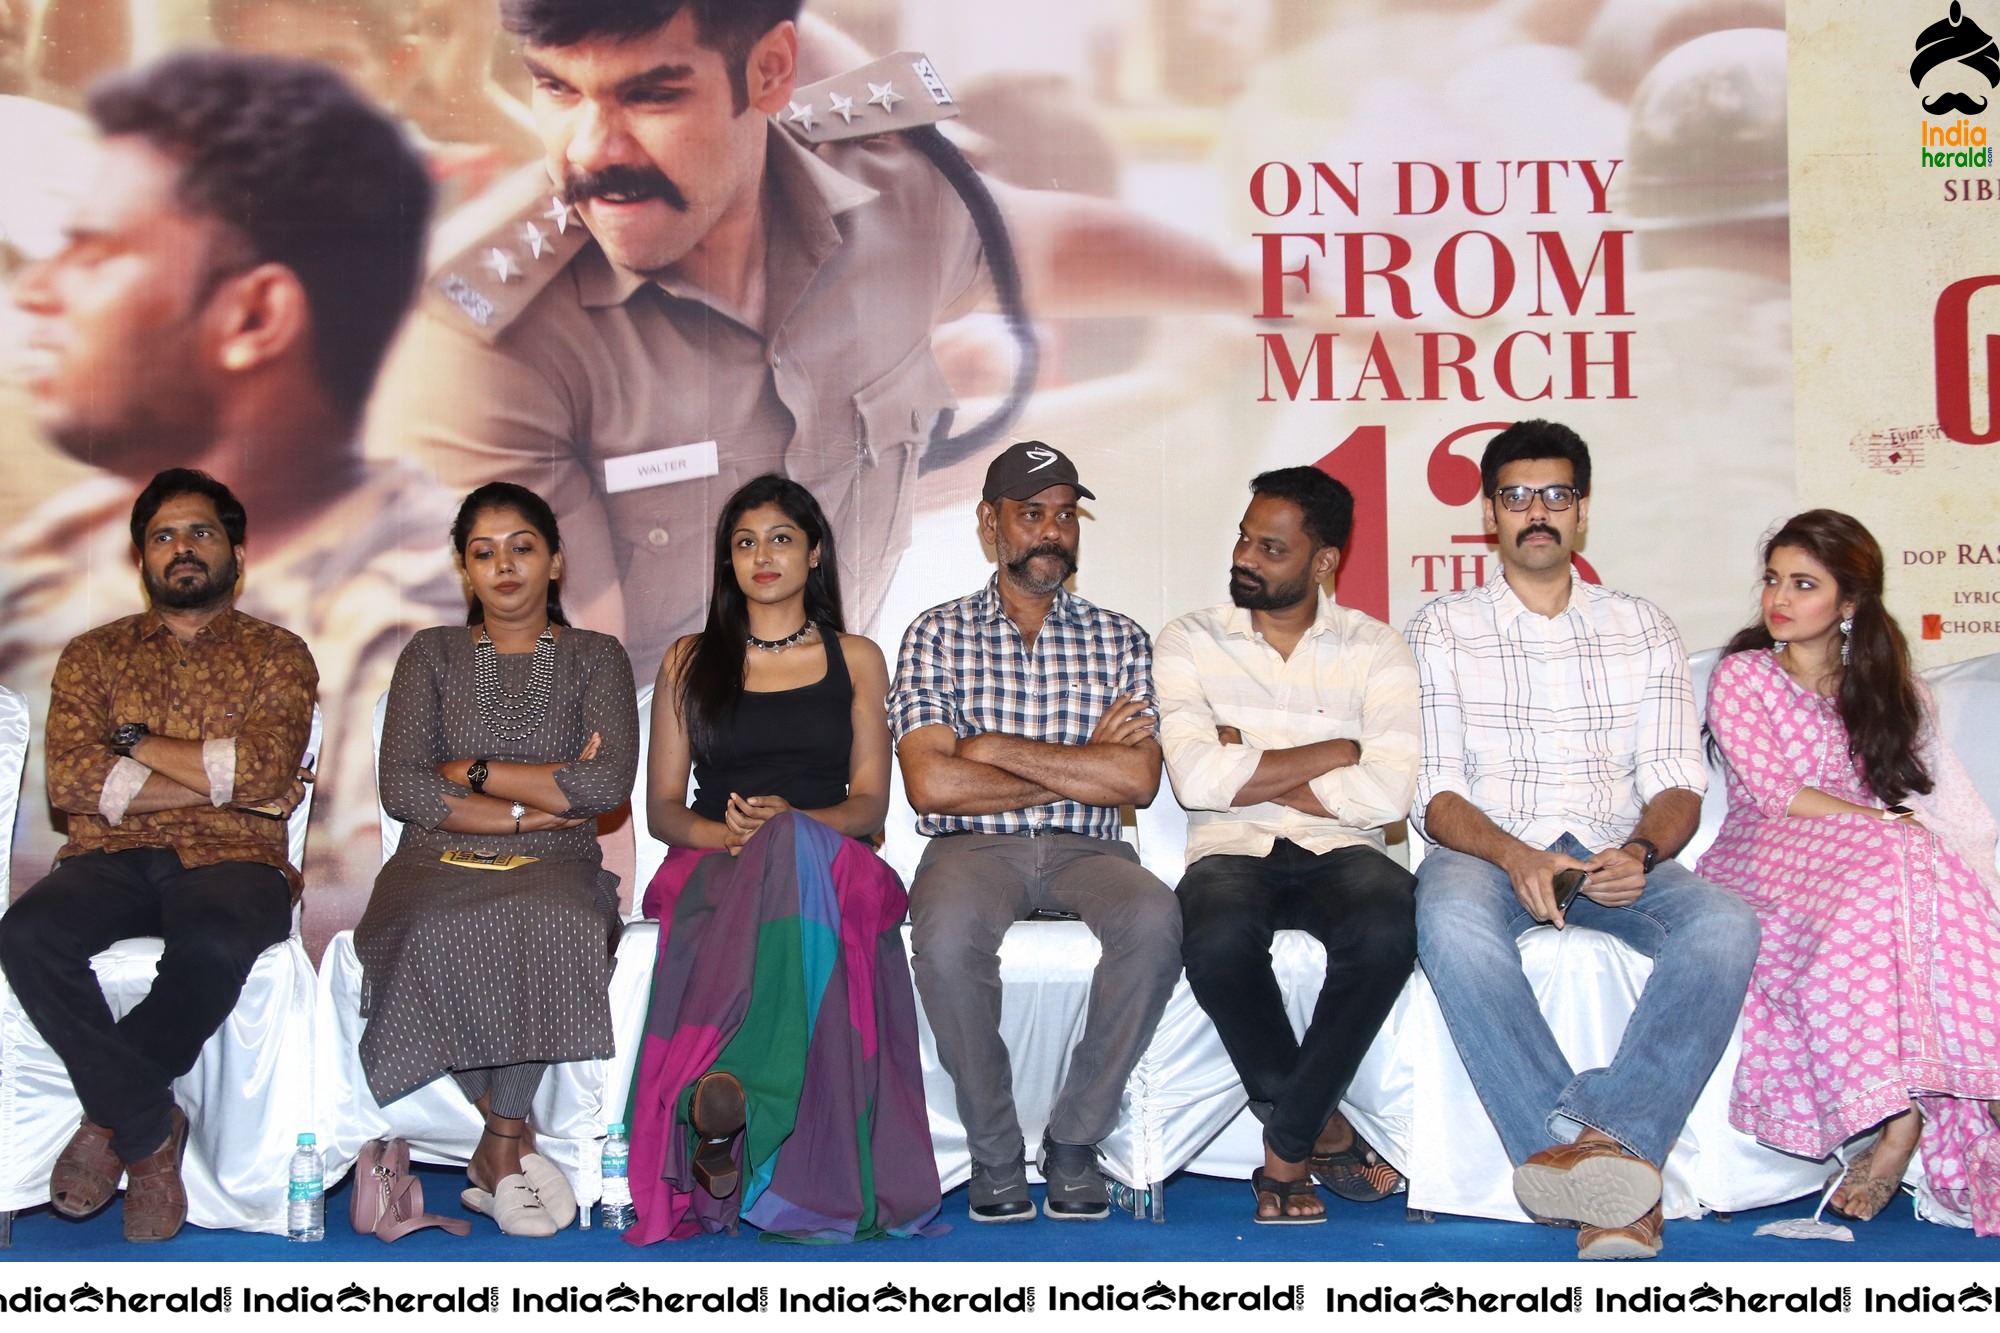 Walter Tamil Movie Press Meet Photos at Chennai set 2